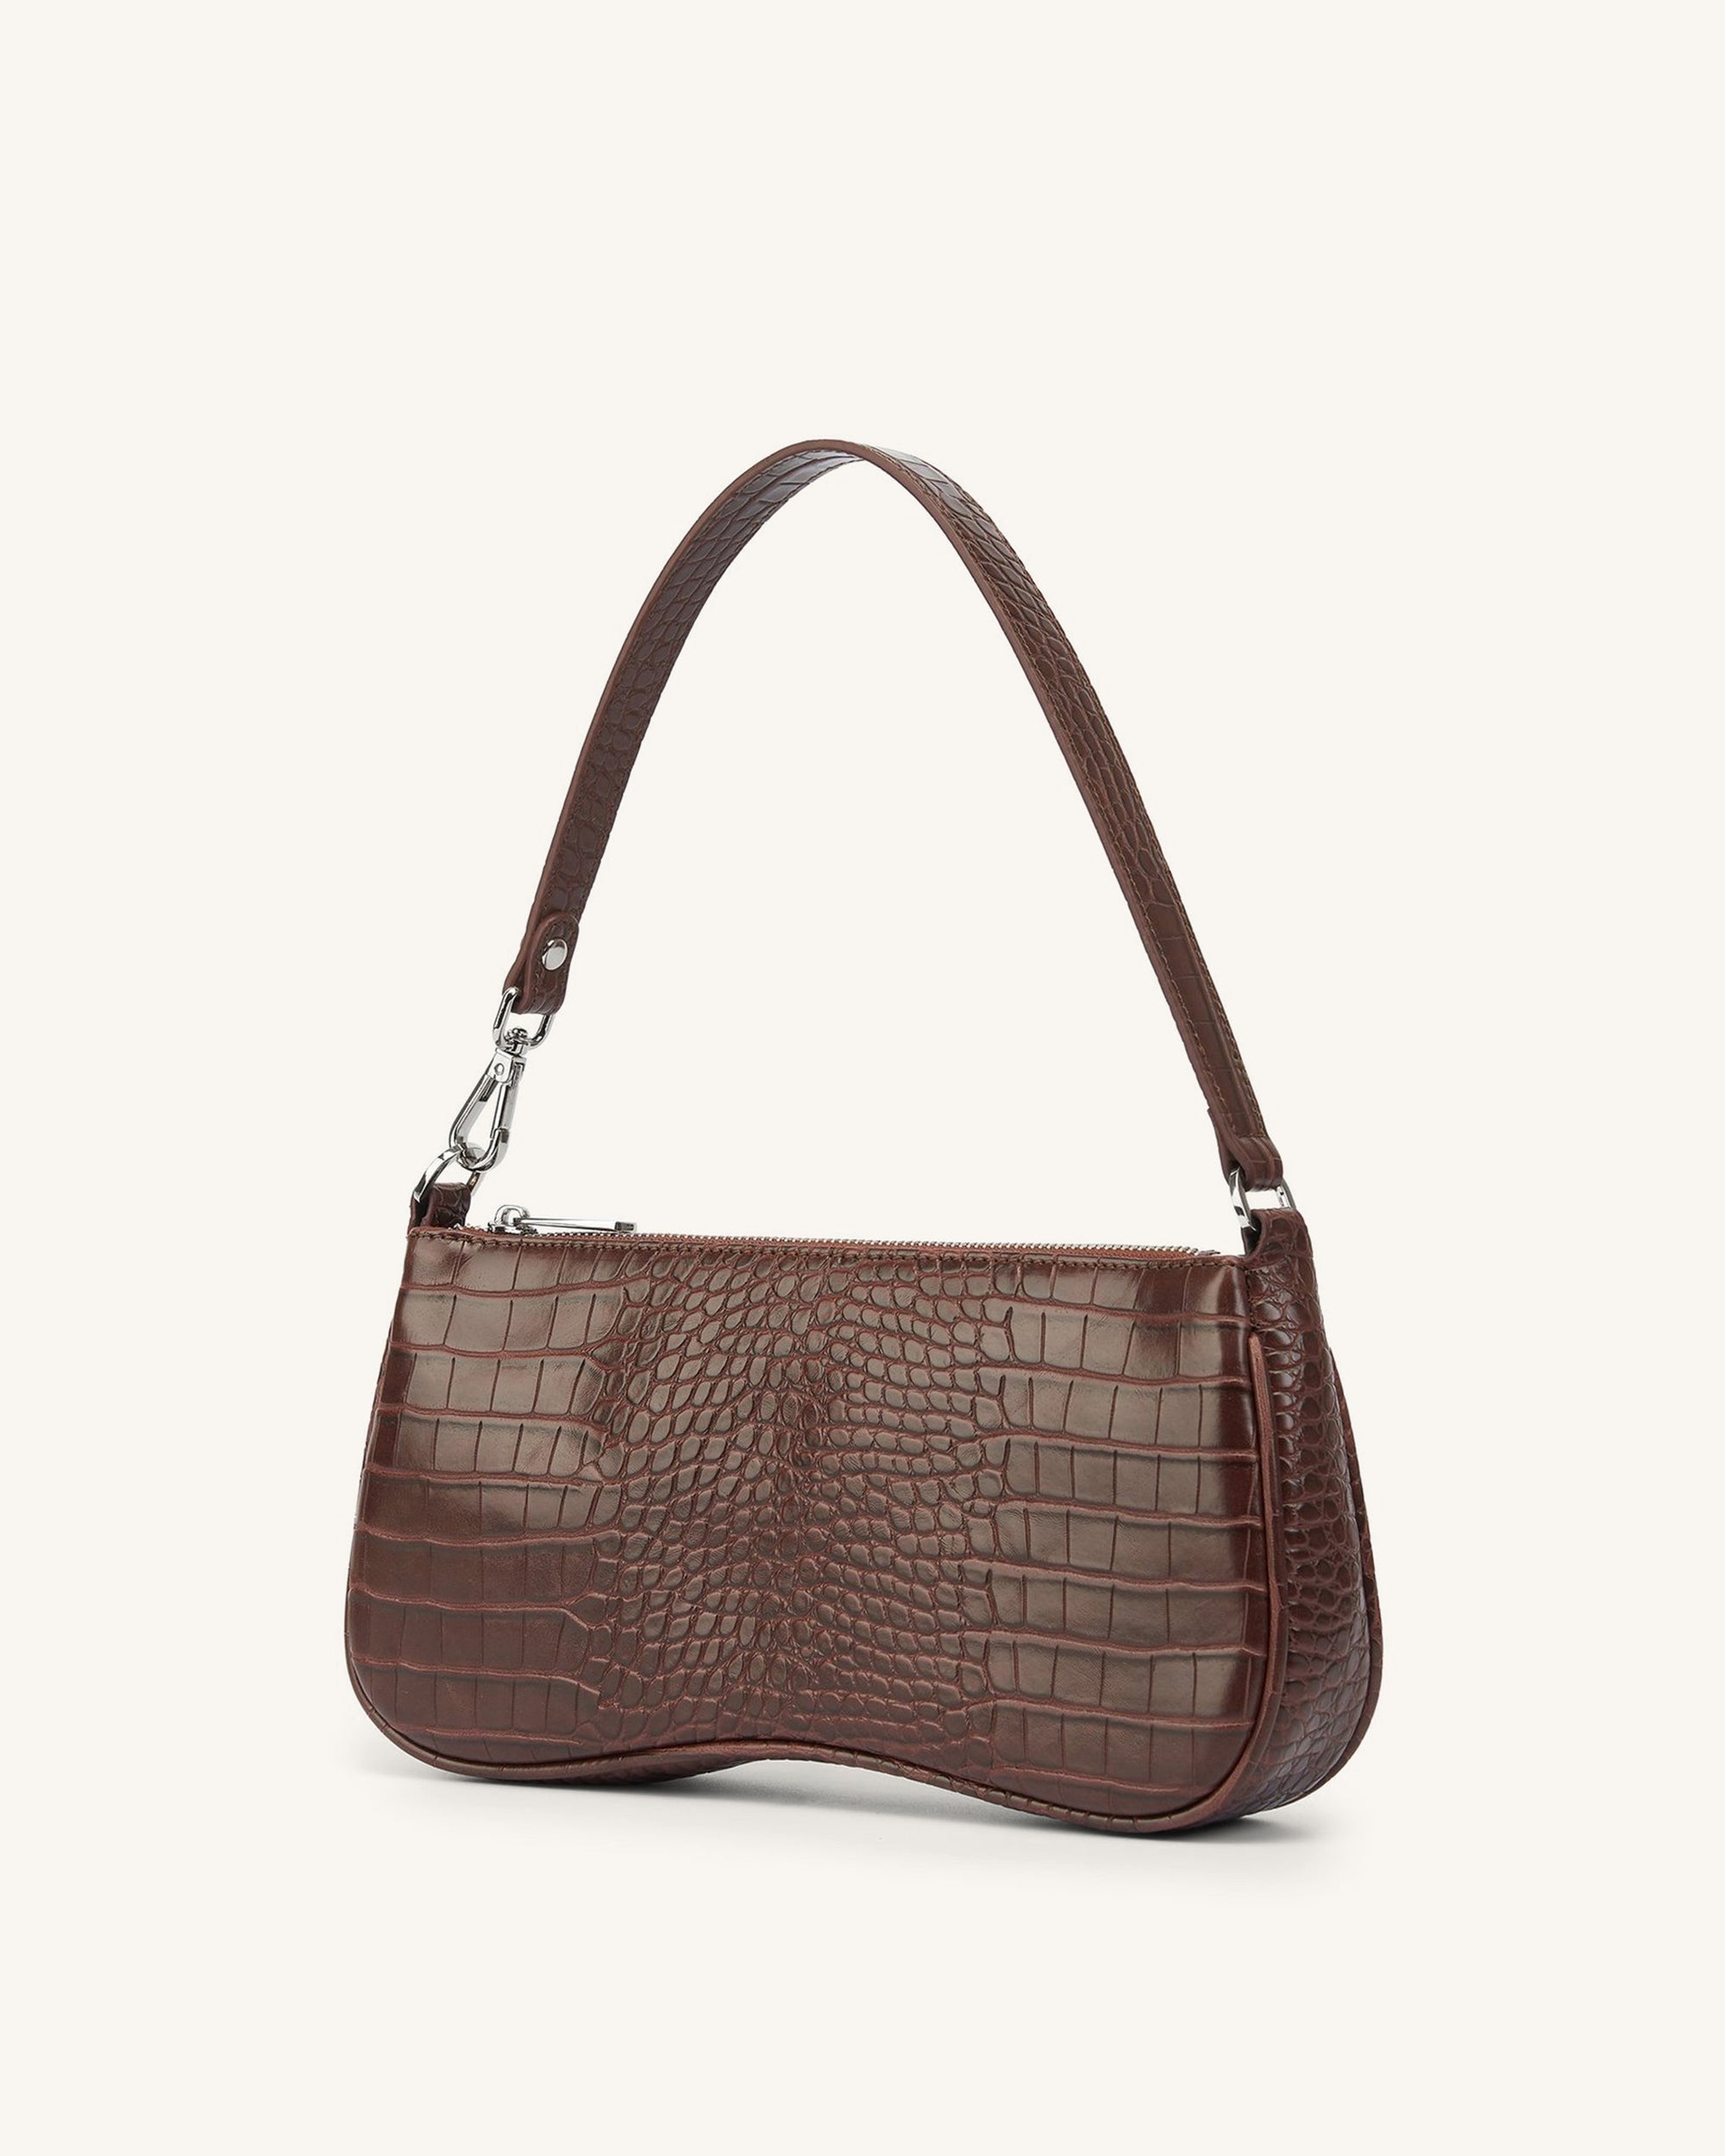 JW Pei - Authenticated Handbag - Brown Crocodile For Woman, Very Good condition